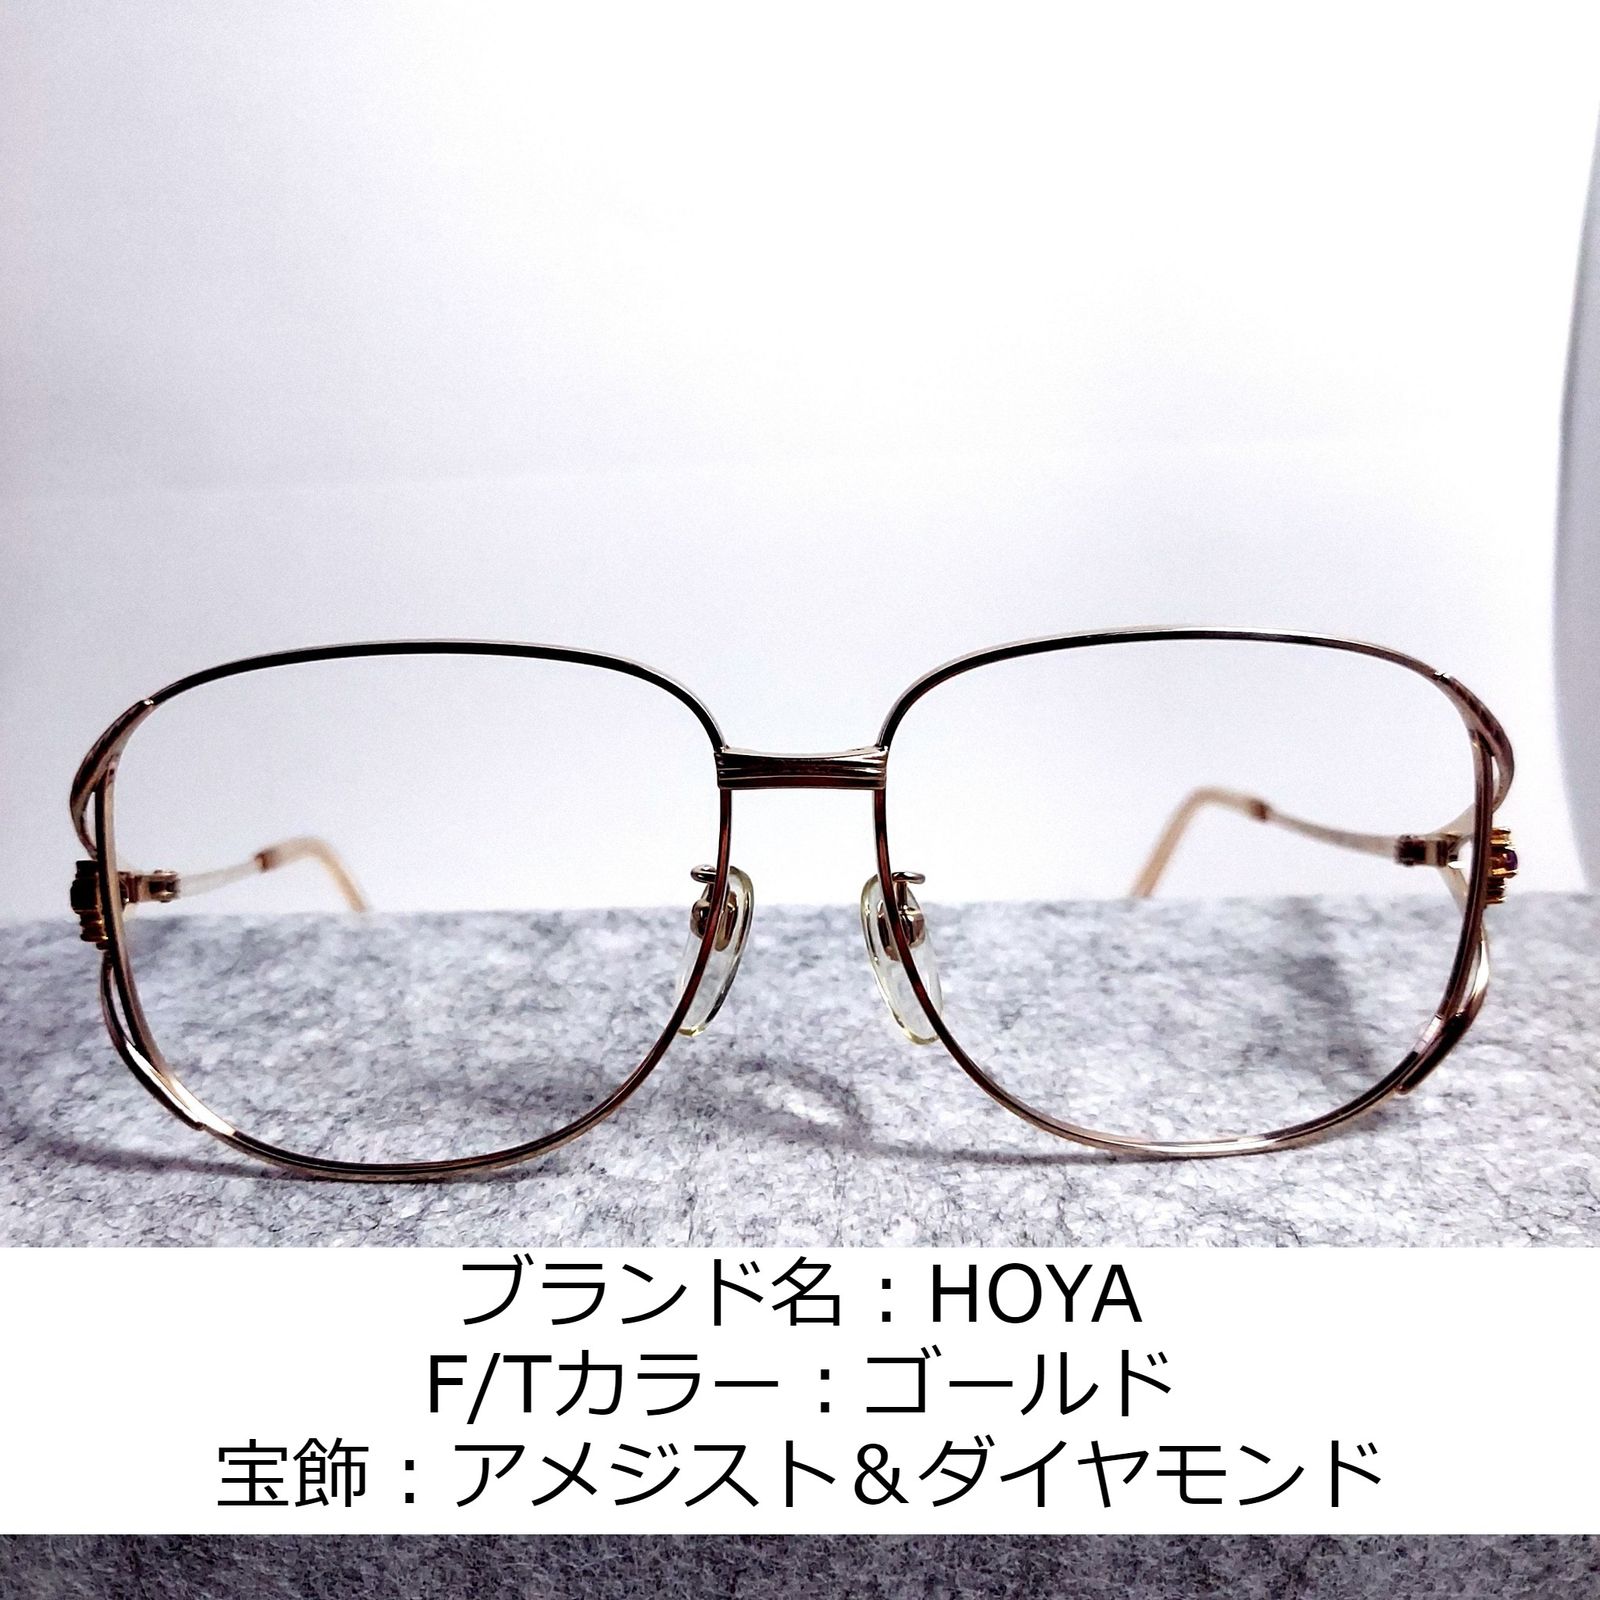 No.748-メガネ HOYA 宝飾アメジストu0026ダイヤモンド【フレームのみ価格】 - レディース